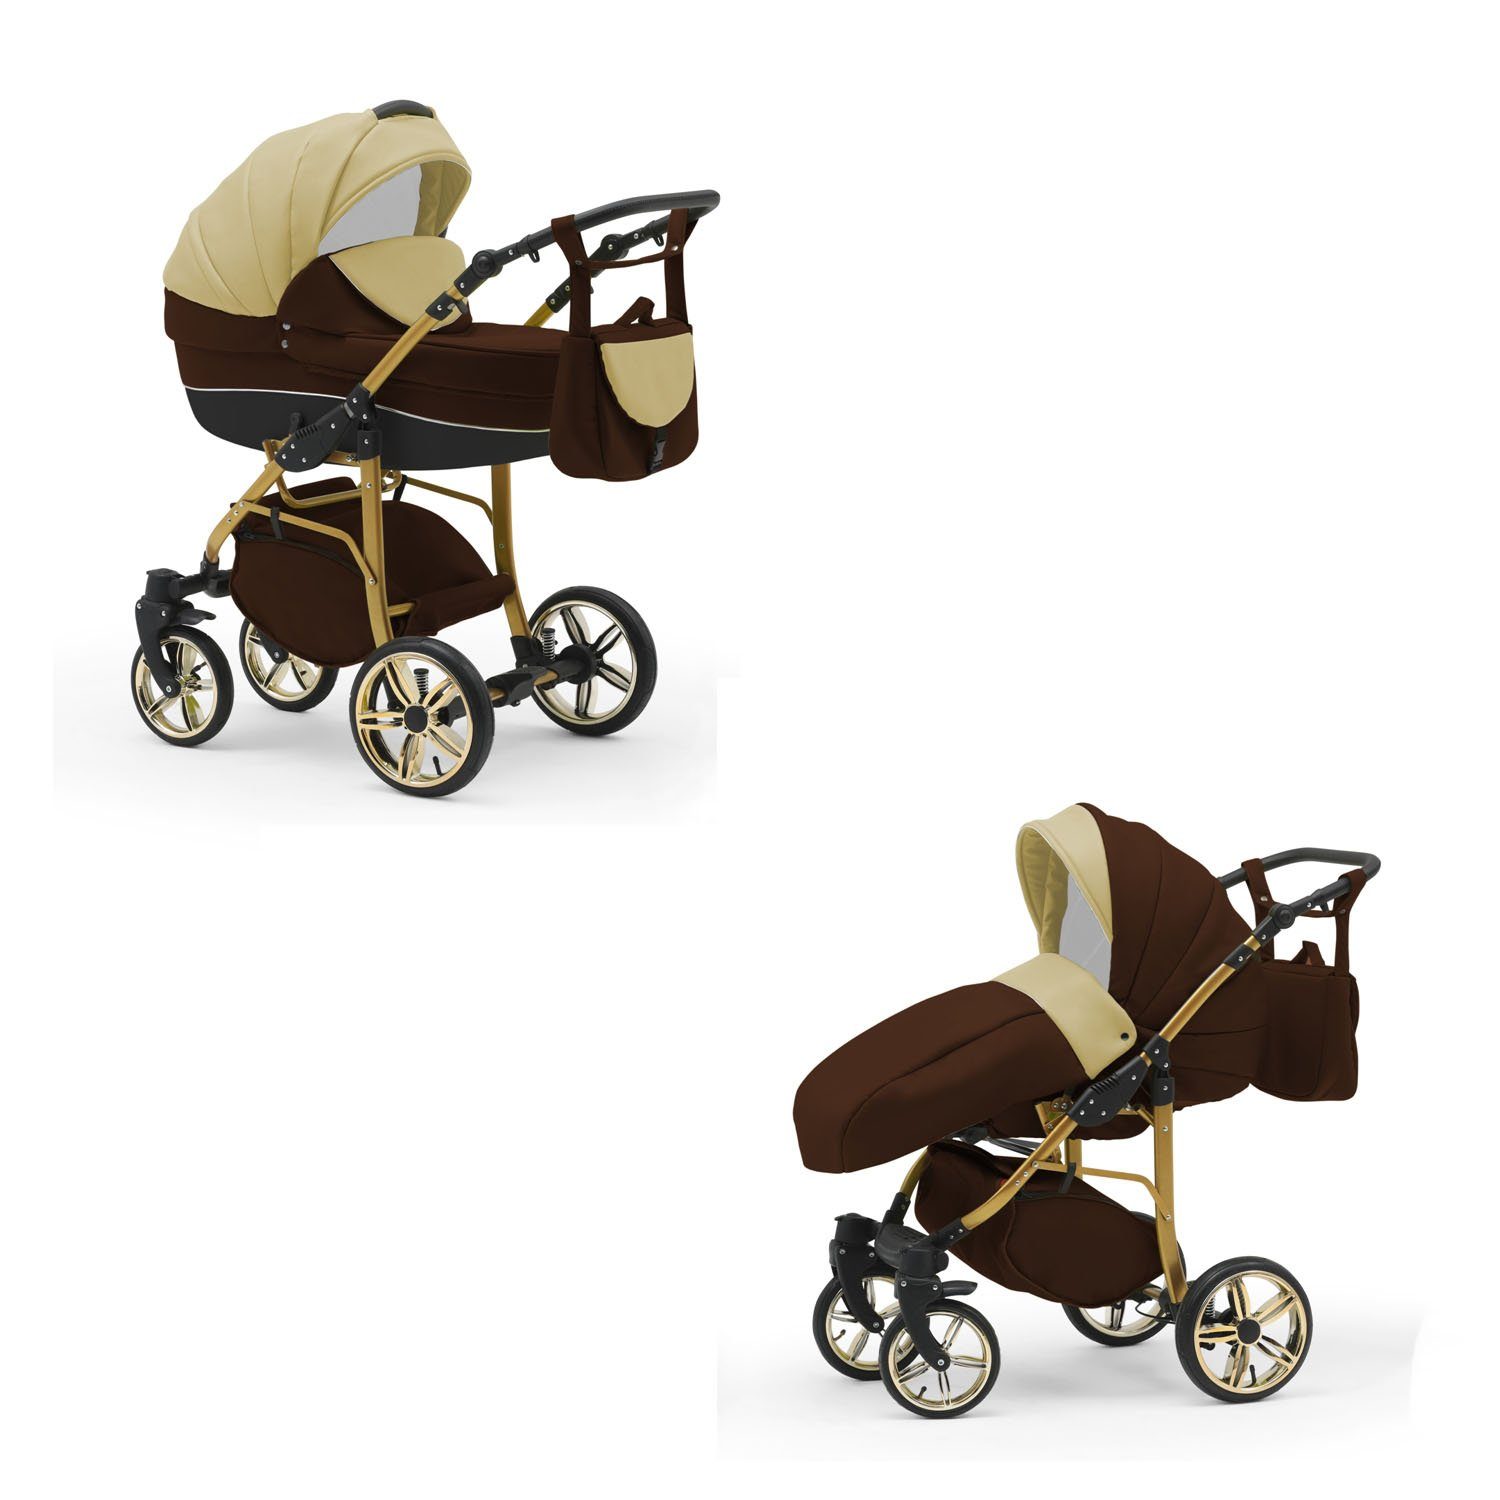 babies-on-wheels Kombi-Kinderwagen 2 in Cosmo Farben - Braun-Beige 13 - 1 ECO Teile Gold 46 Kinderwagen-Set in